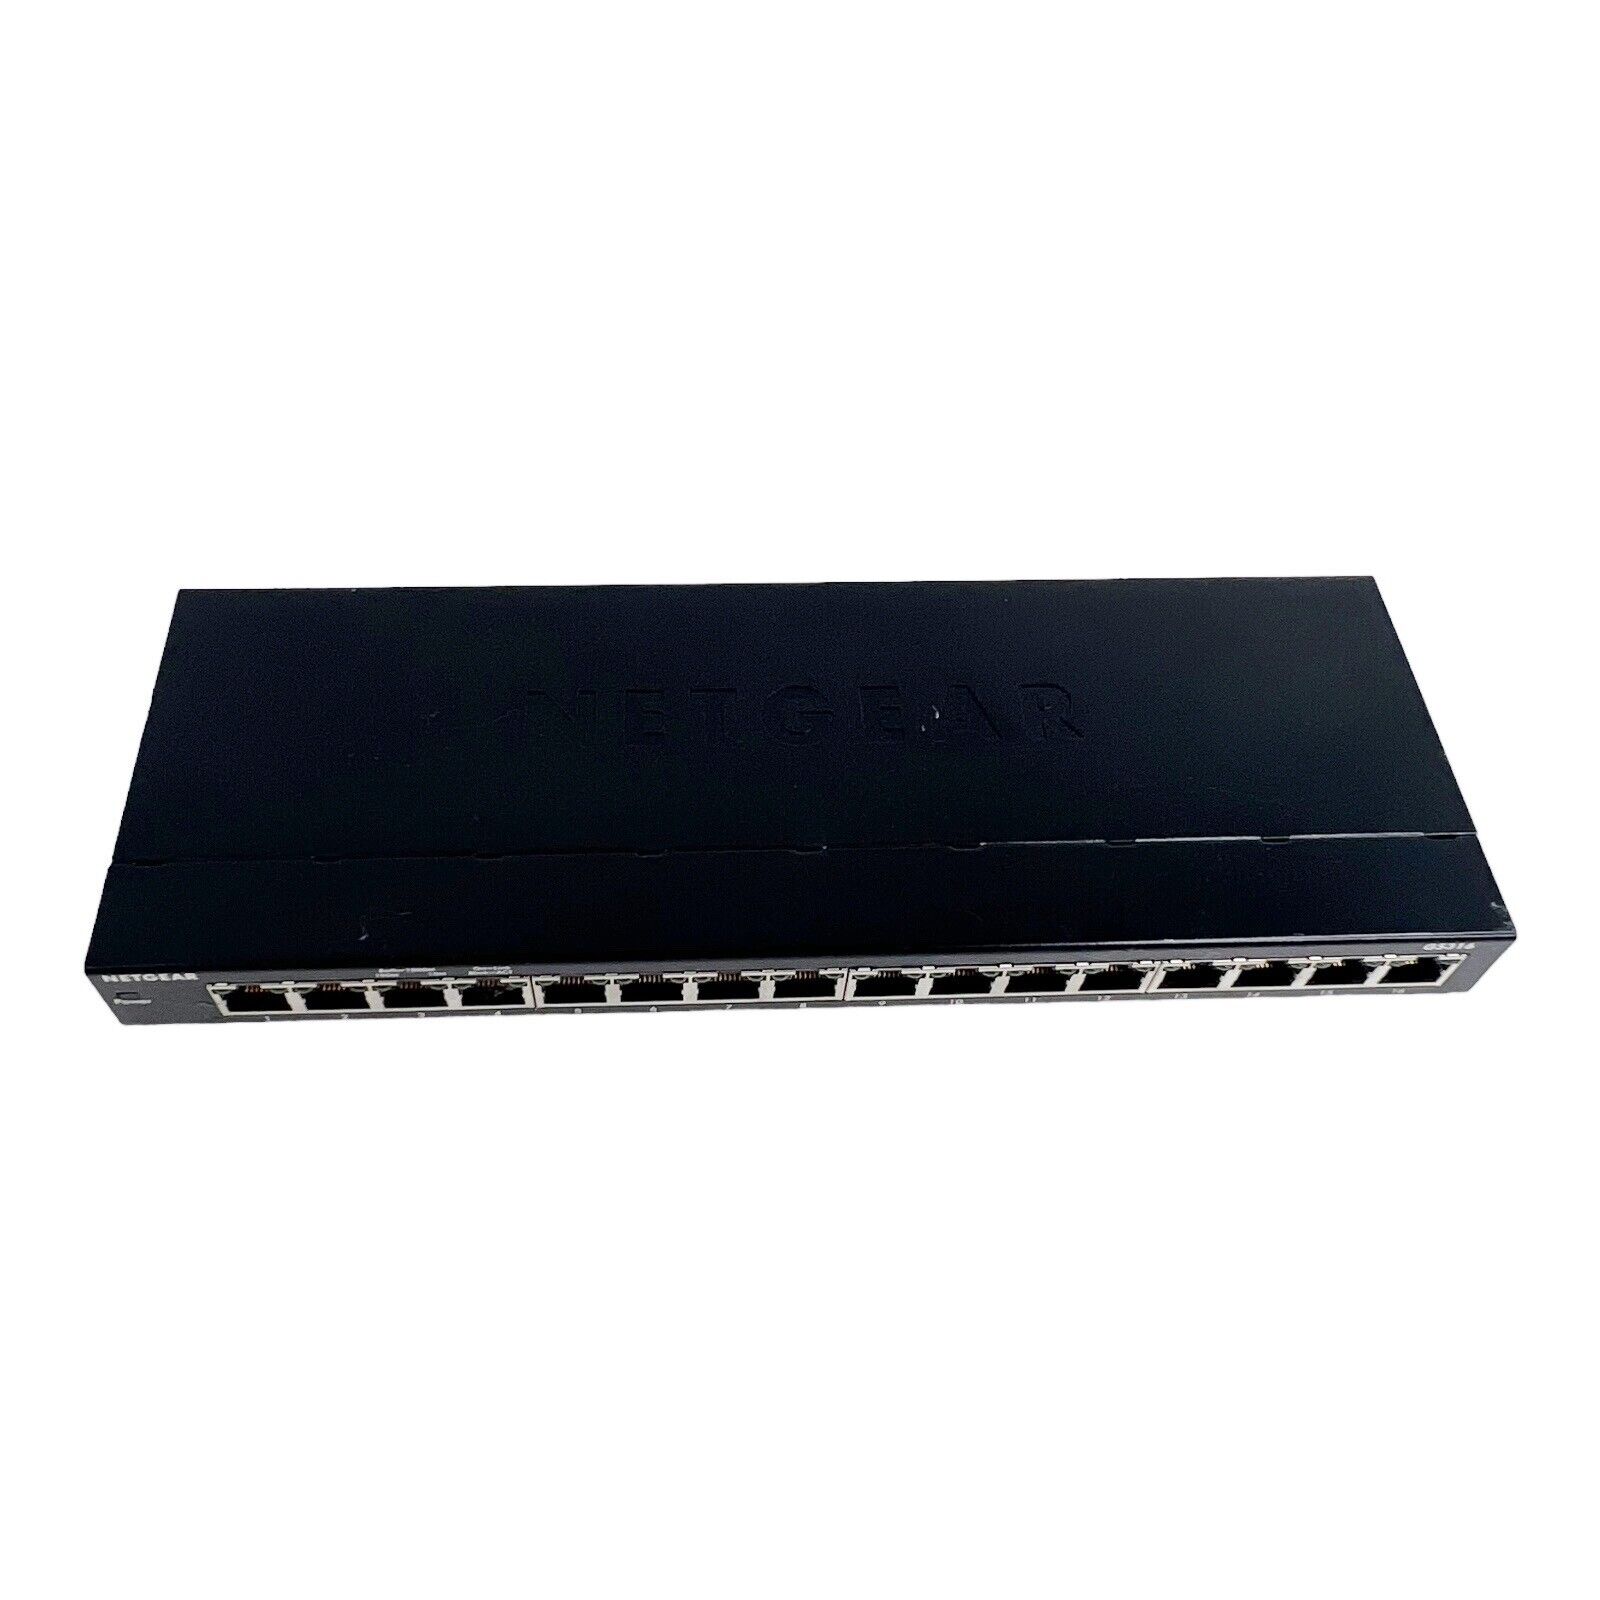 NETGEAR GS316 16 Port Standalone Gigabit Ethernet Switch (NO CABLES)